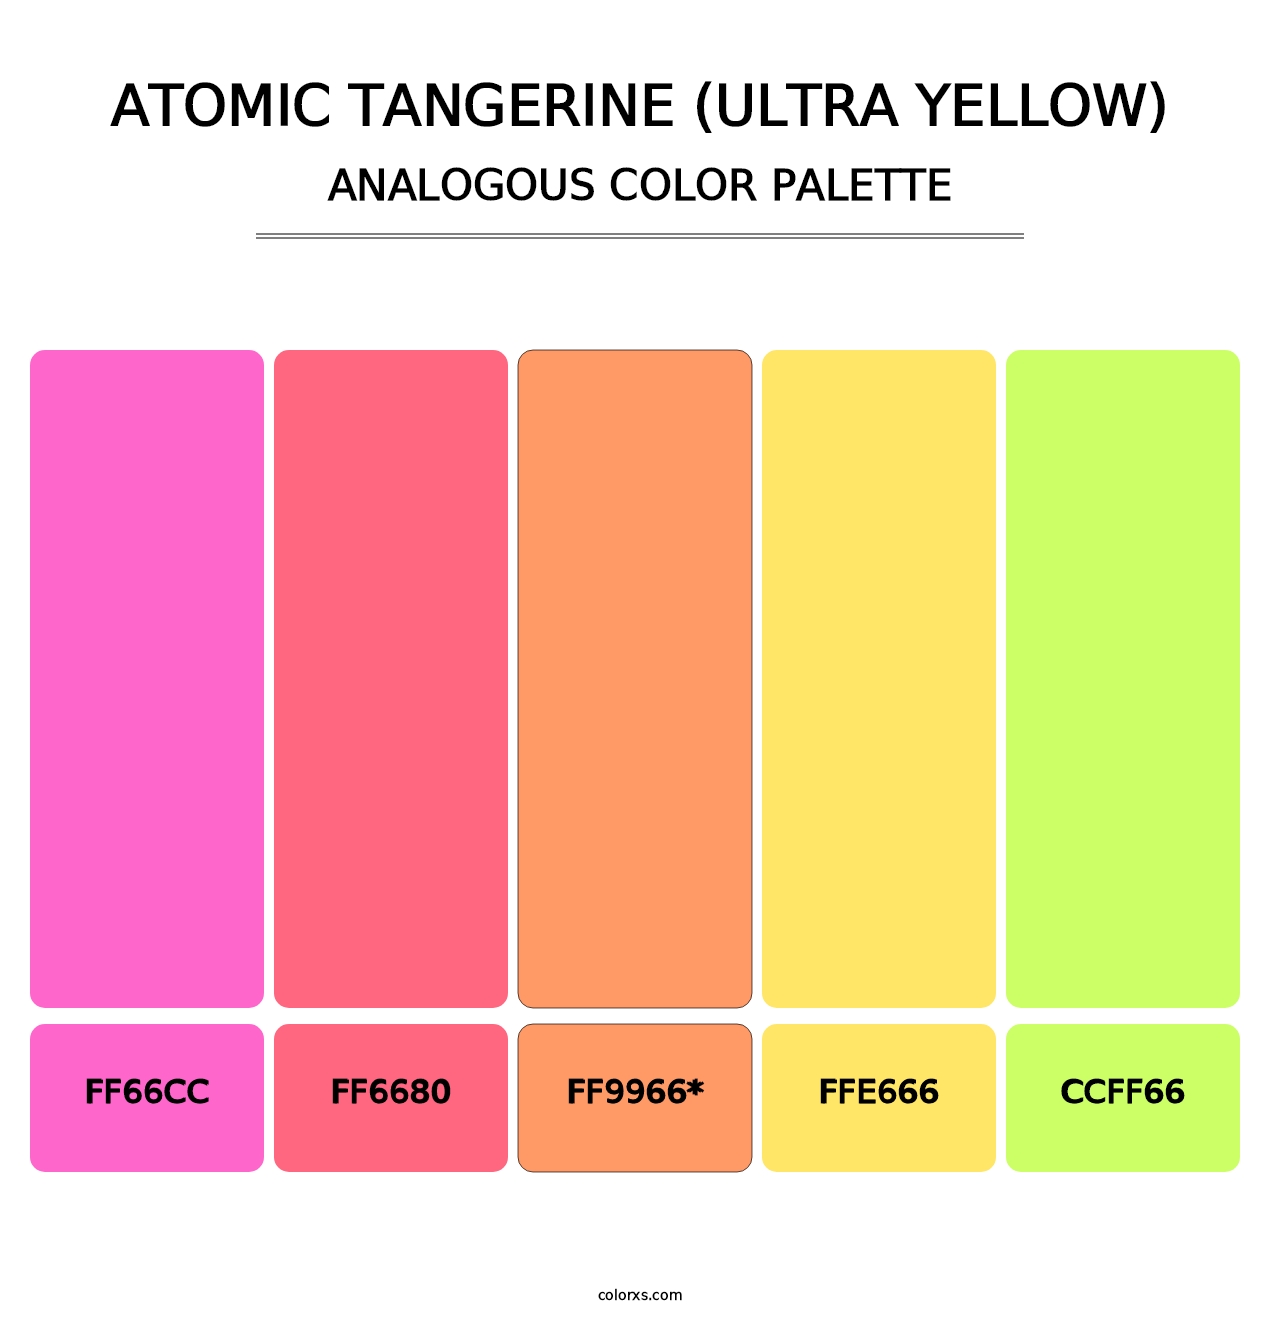 Atomic Tangerine (Ultra Yellow) - Analogous Color Palette